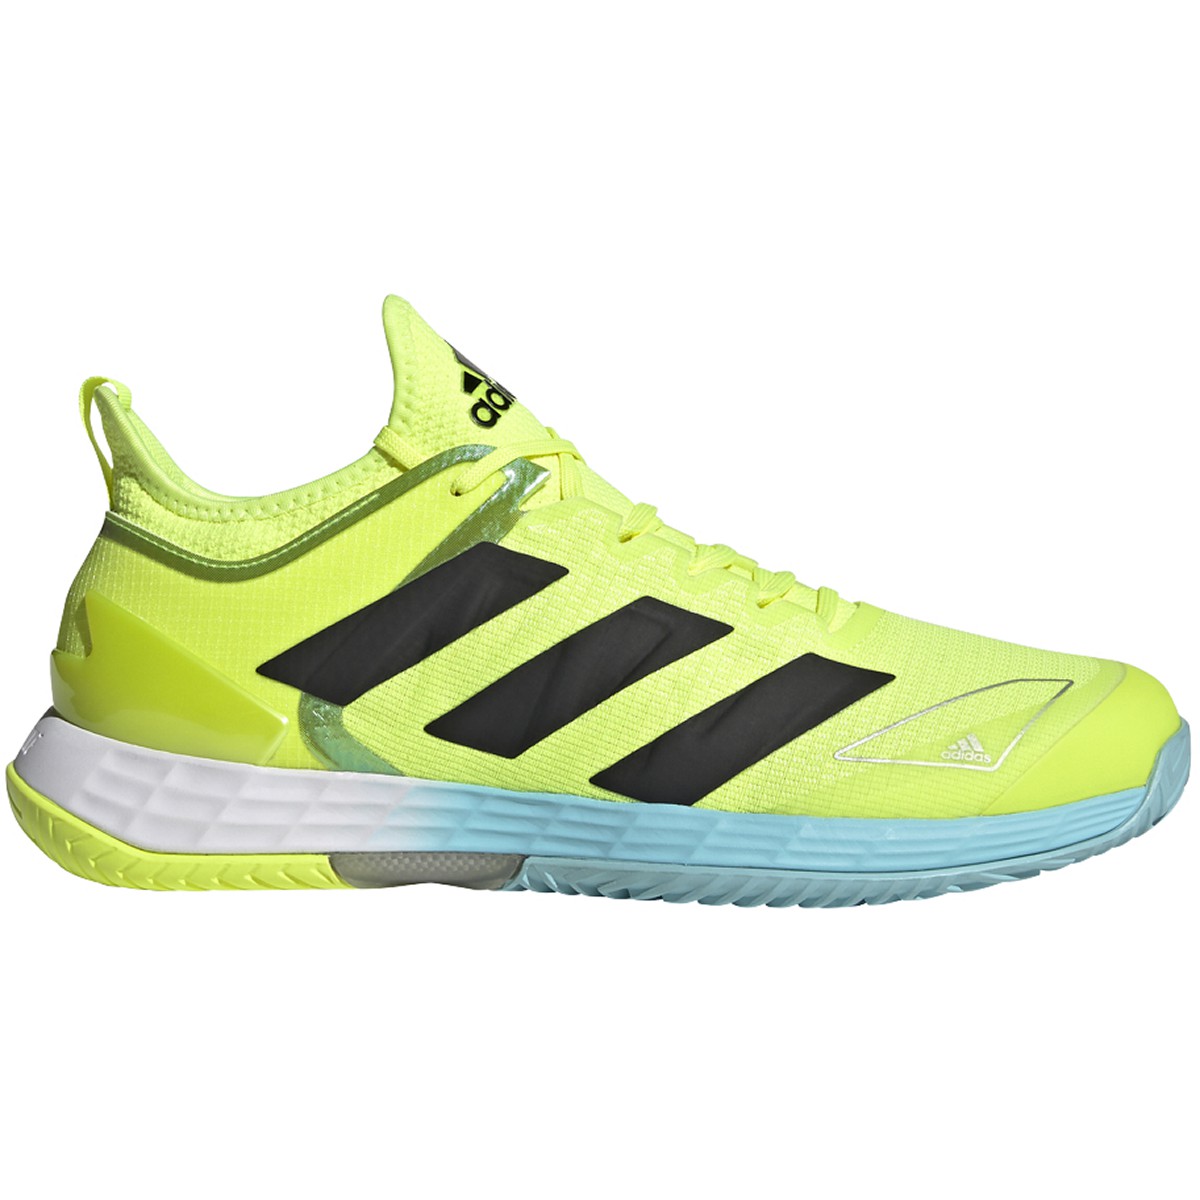 Adidas Men's Adizero Ubersonic 4 Tennis Shoes (Yellow/Core Black/Hazy Sky)